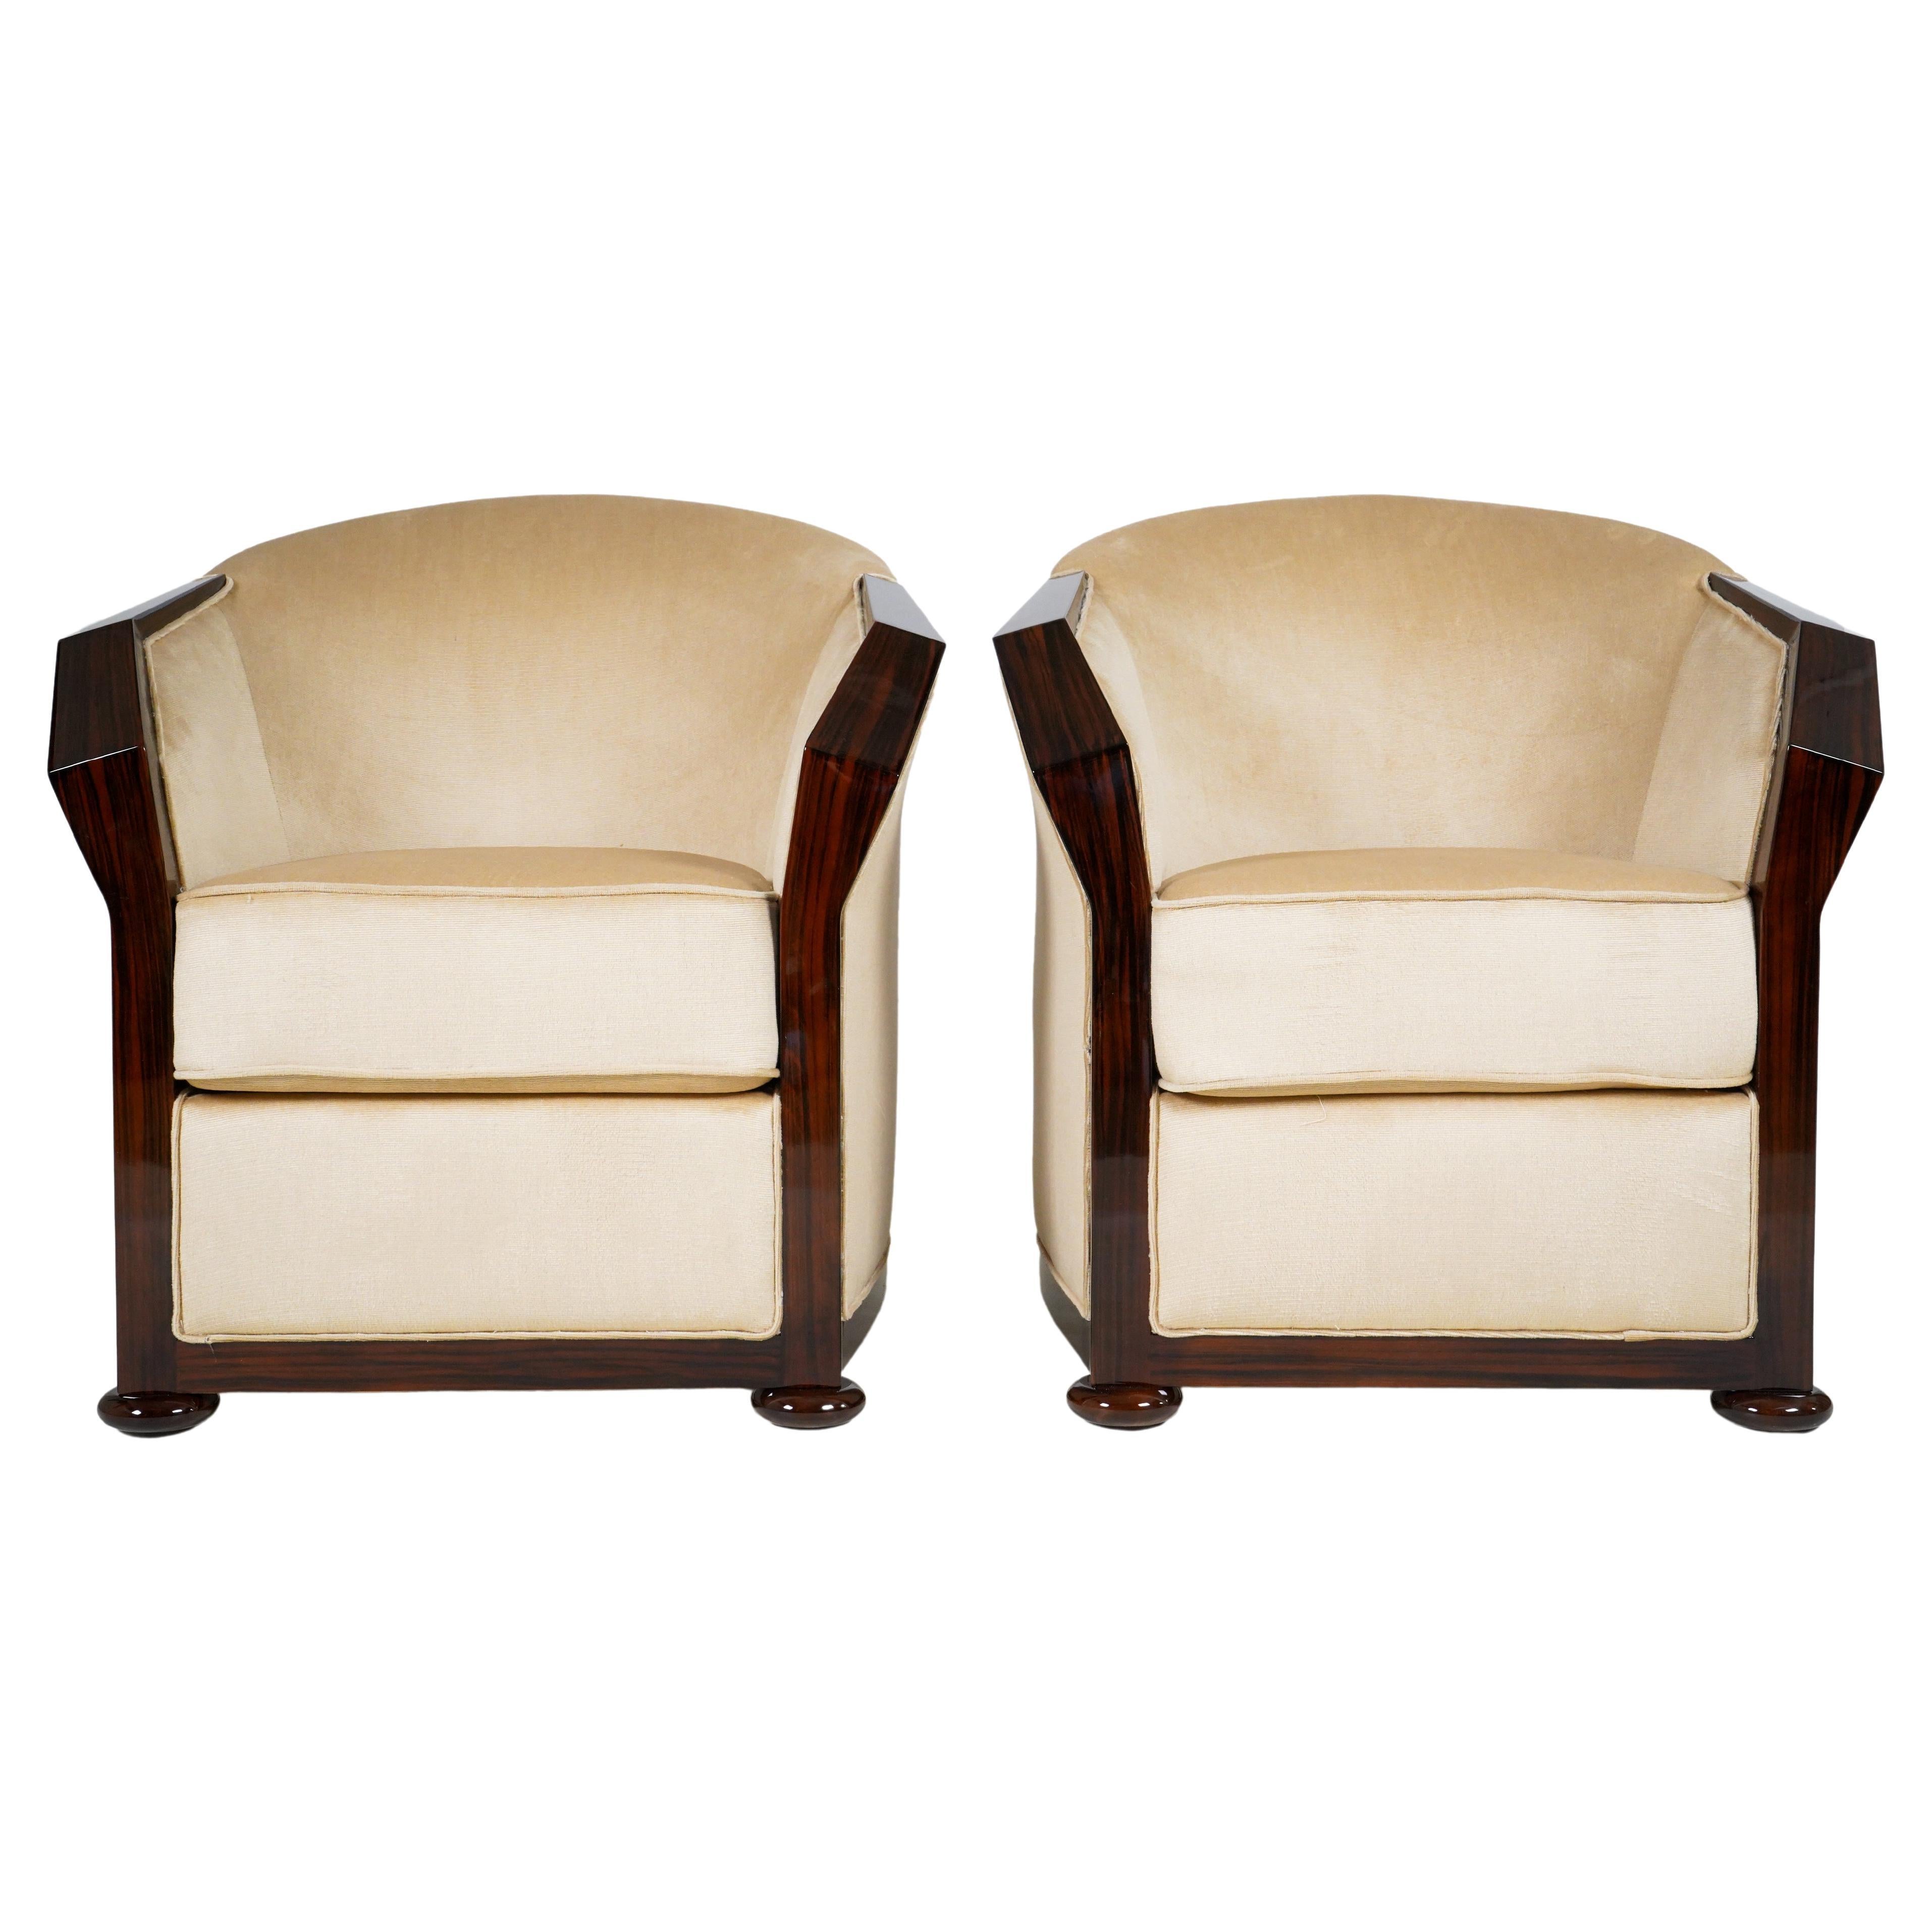 Pair of Art Deco Style Armchairs with Walnut Veneers